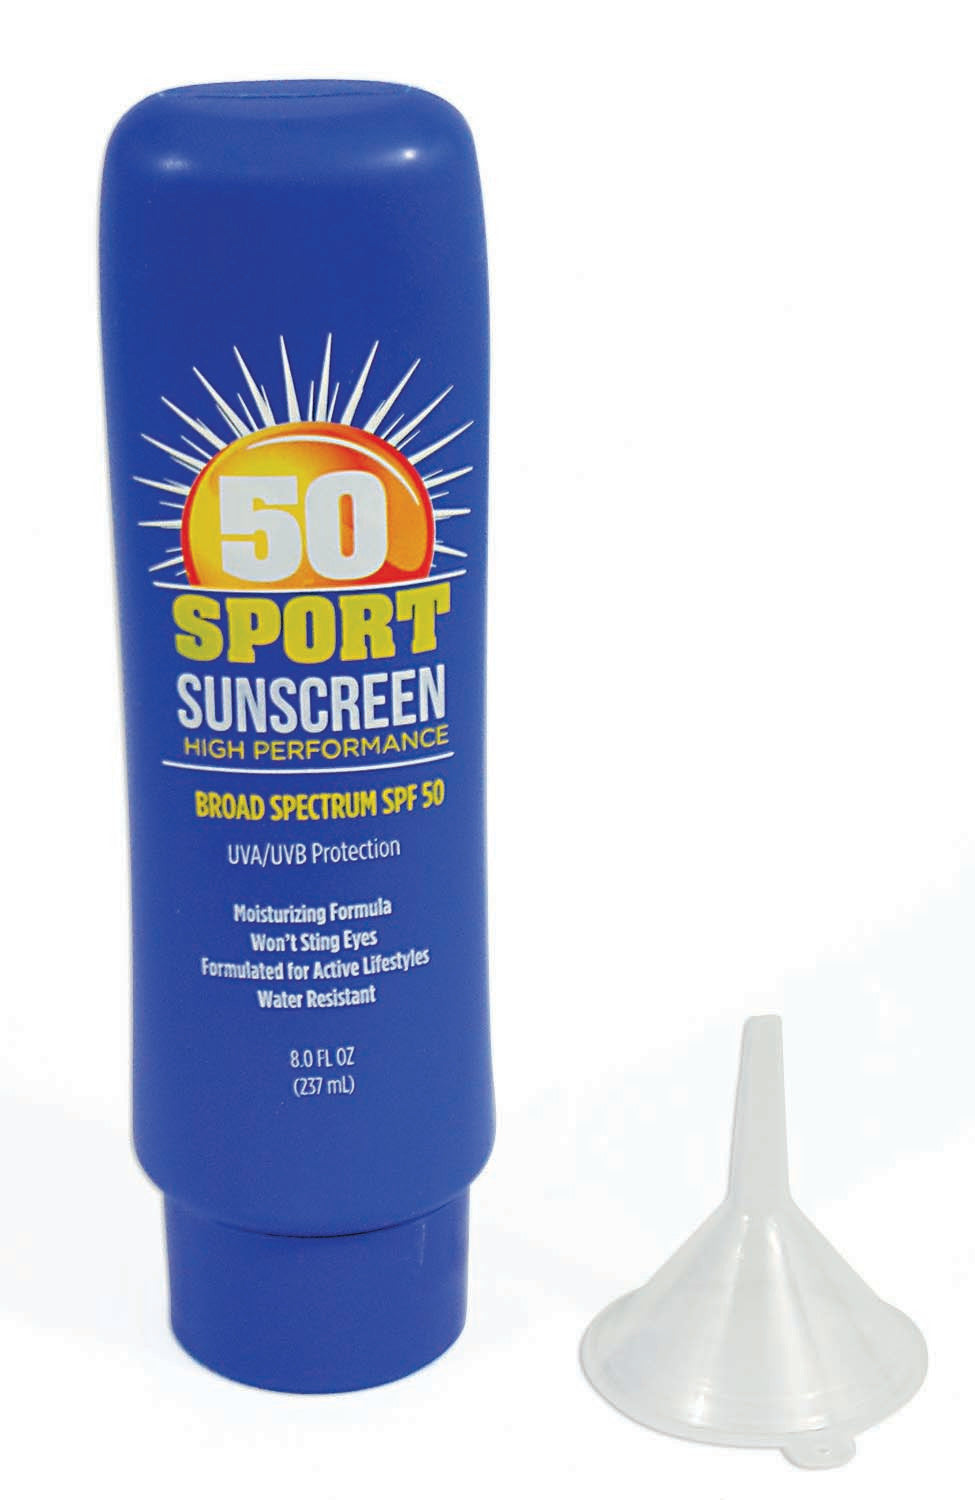 Smuggle Your Booze - Sunscreen